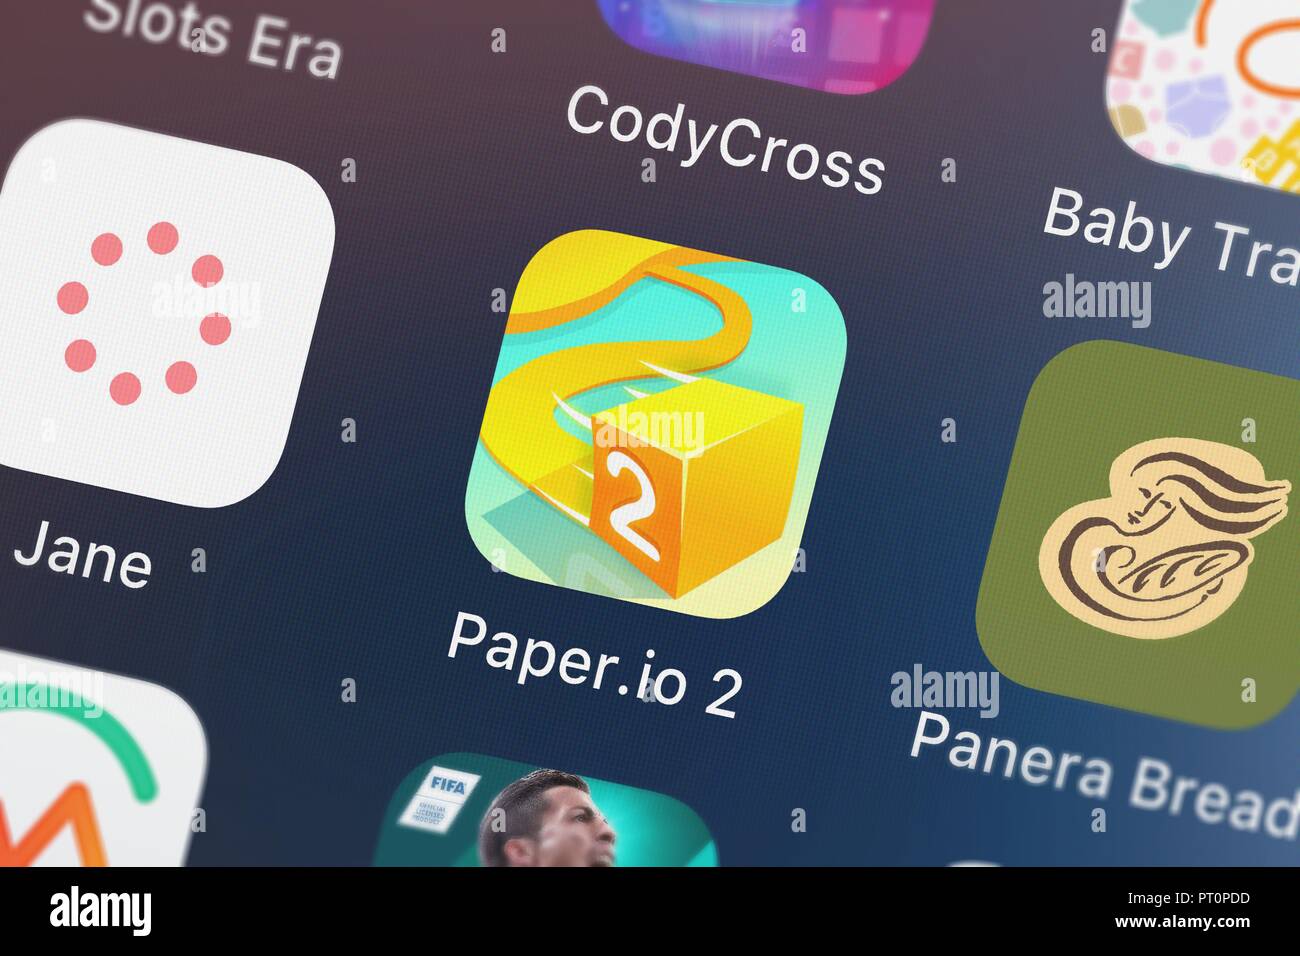 Paper.io 2, Apps